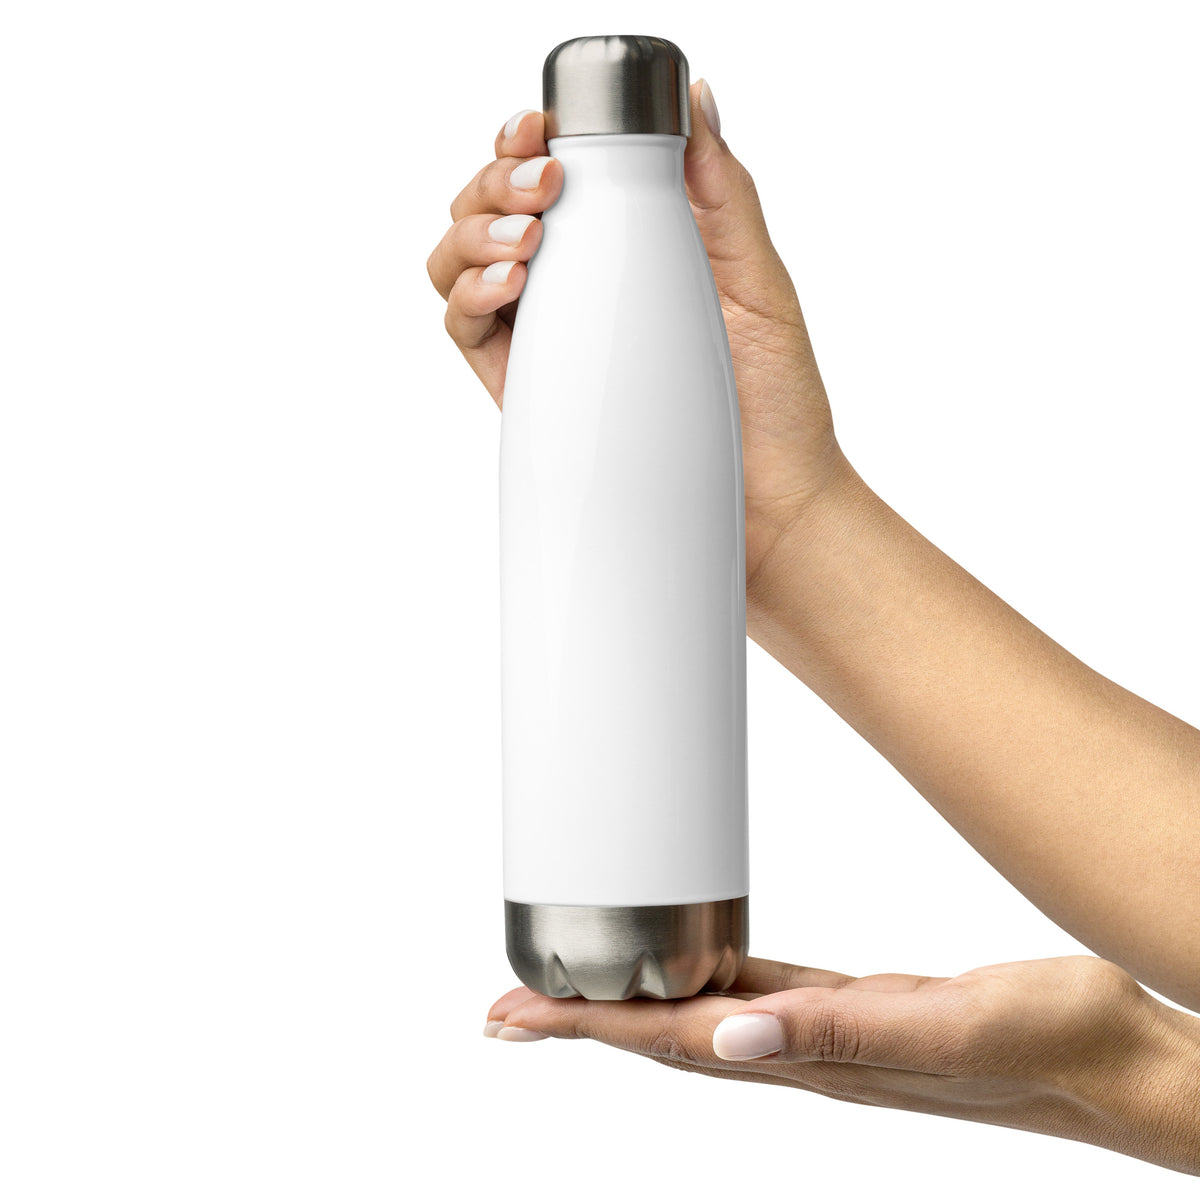 Engel 17oz Stainless Steel Vacuum Insulated Water Bottle by Engel Coolers